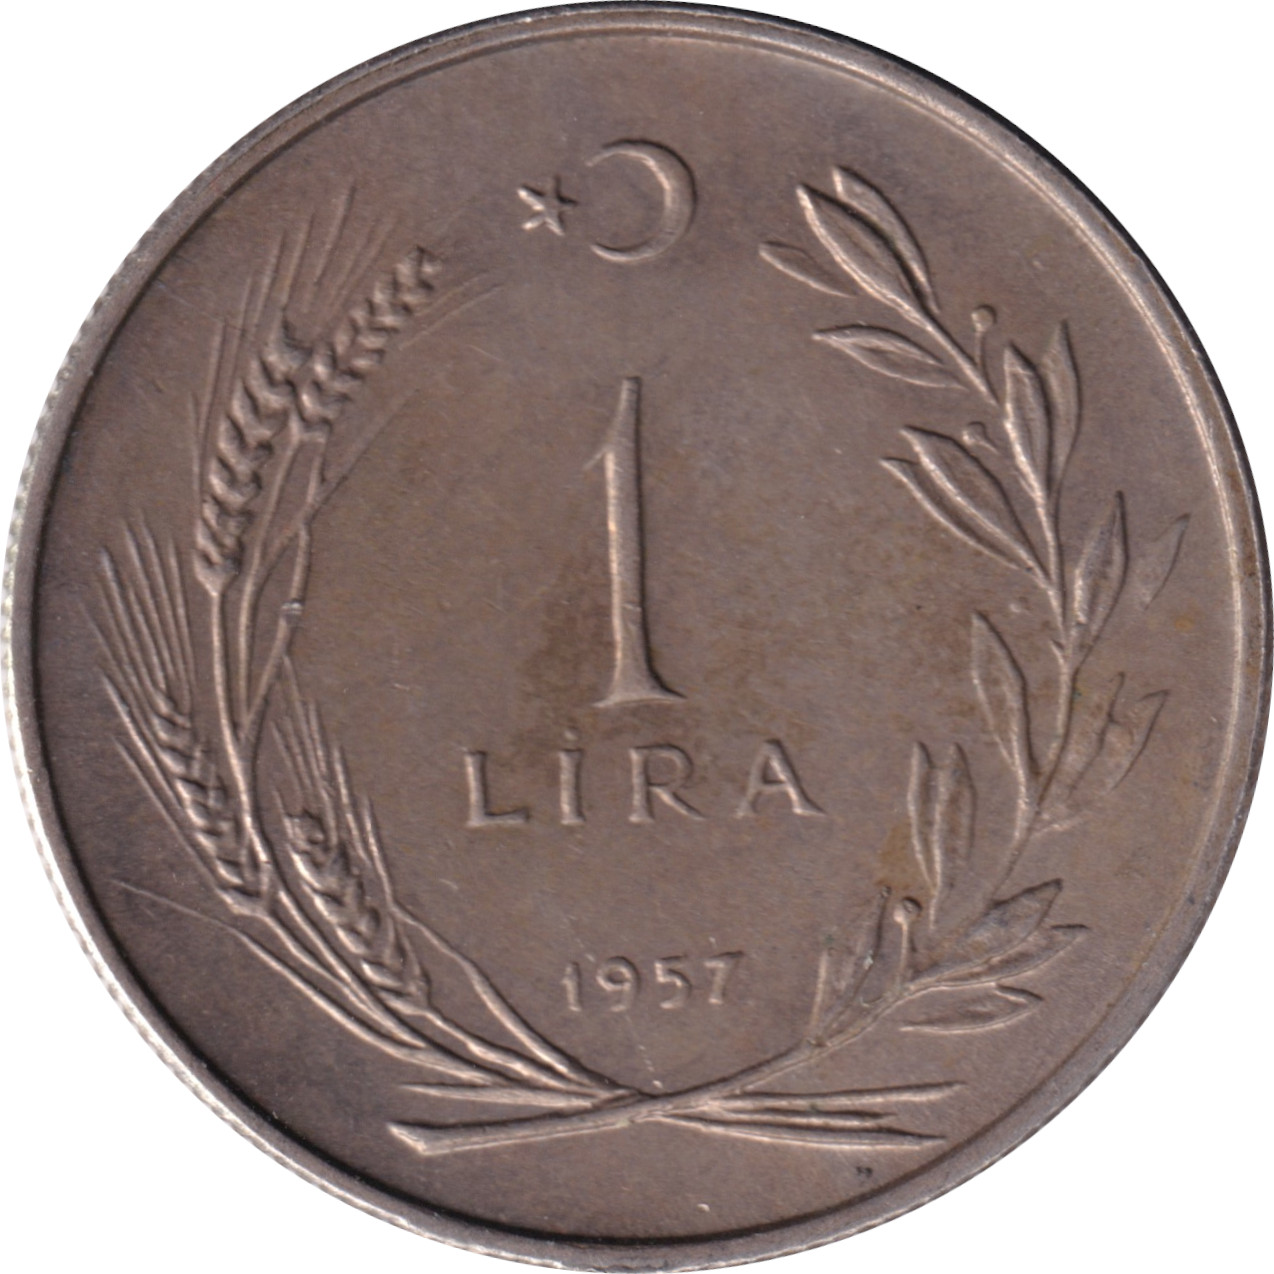 1 lira - Kemal Ataturk - Type 2